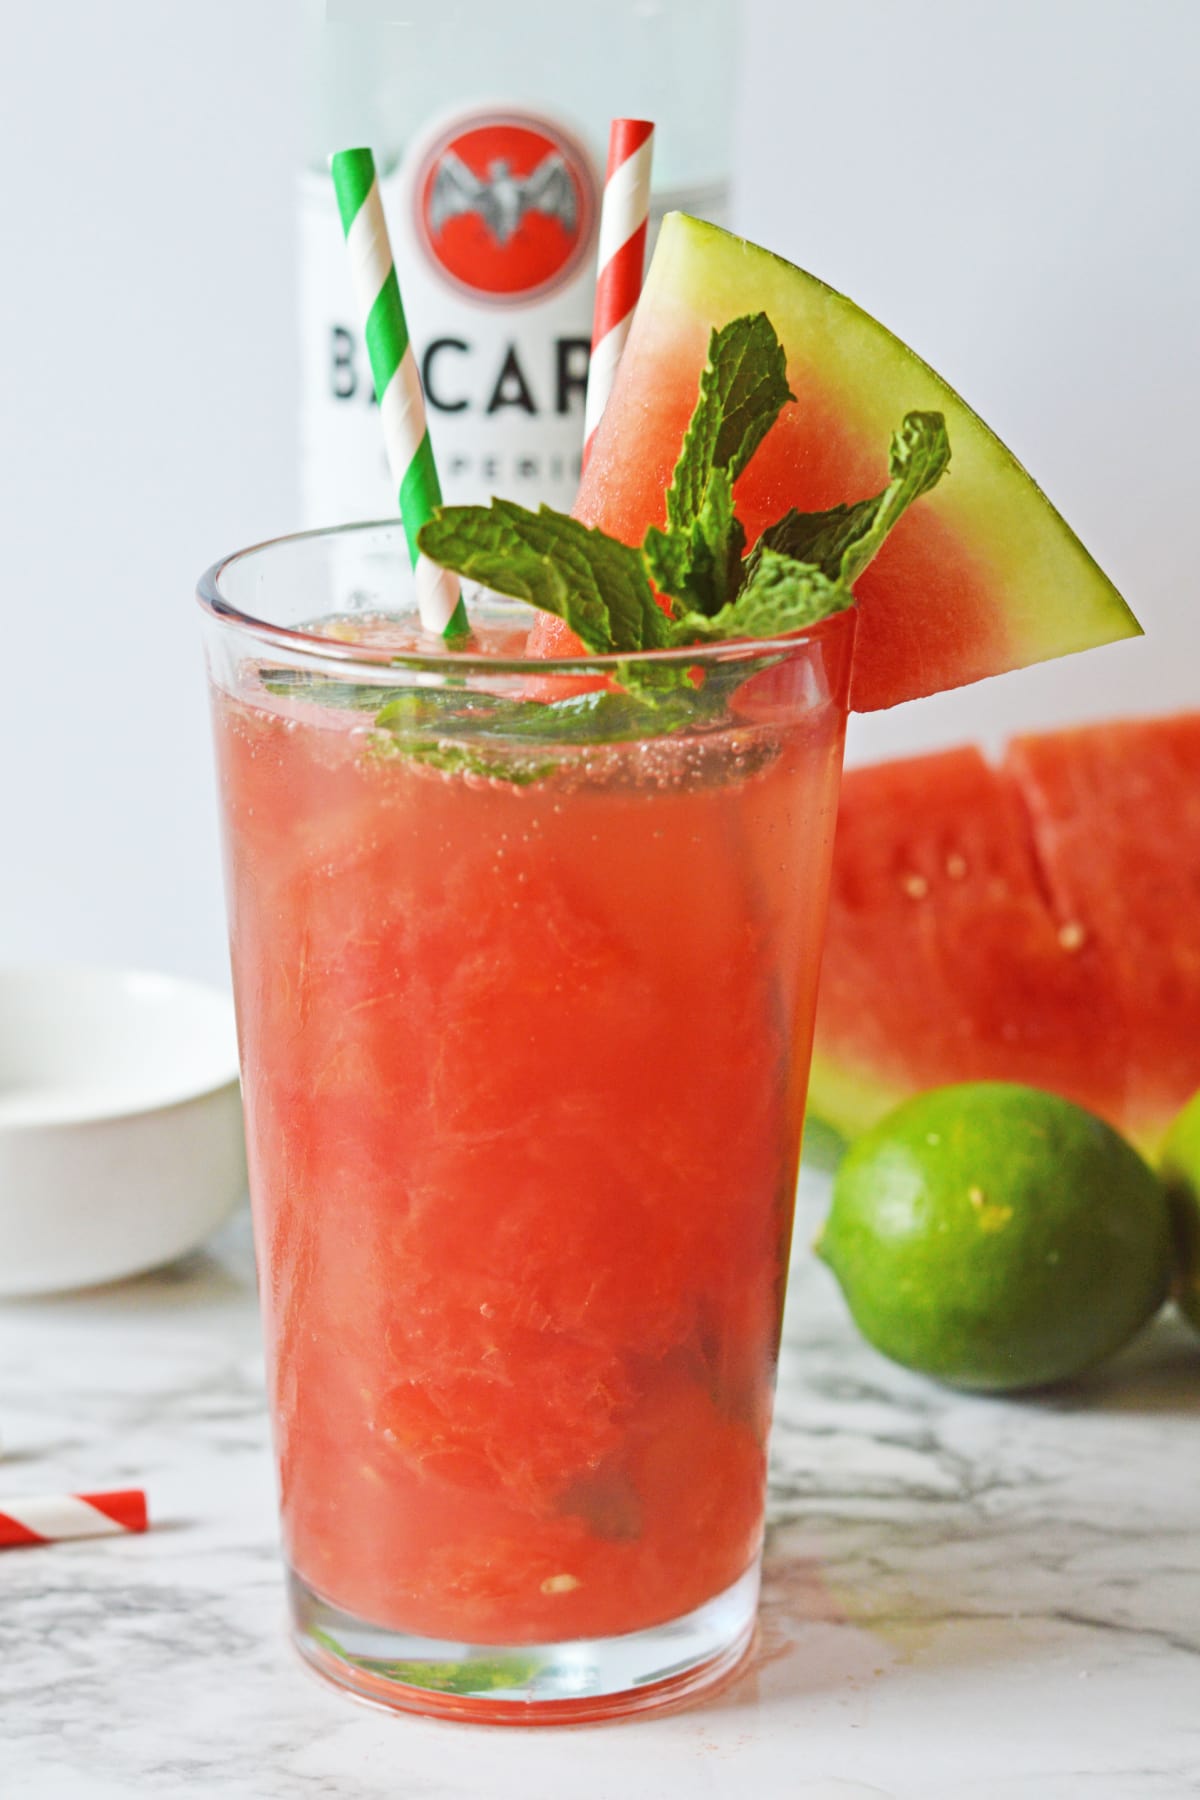 Watermelon mojito recipe with Bacardi bottle in background